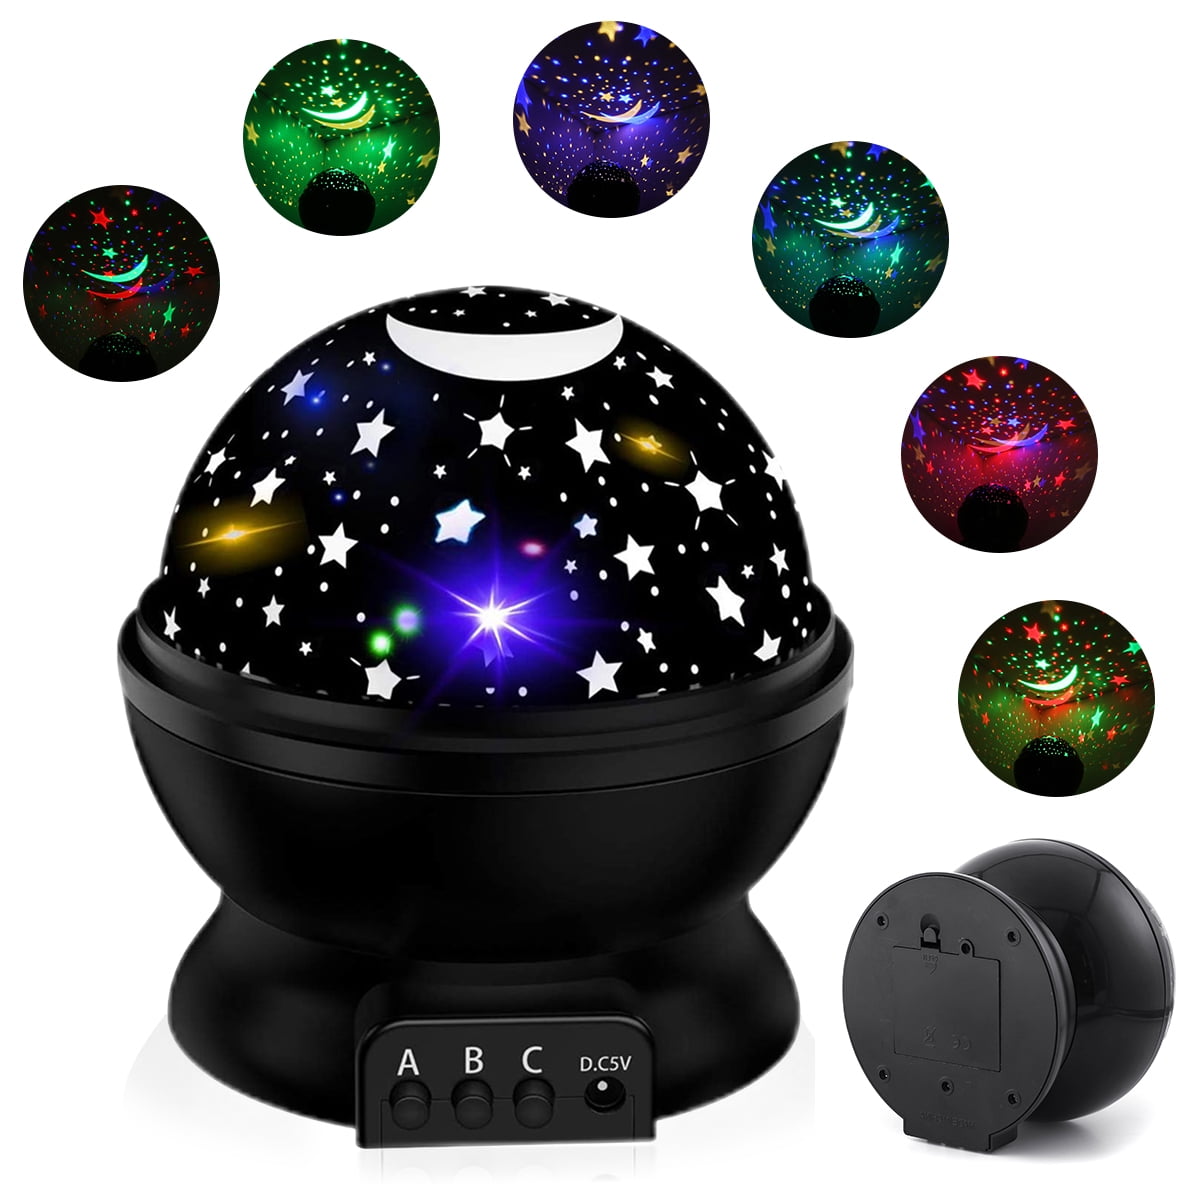 Details about   LED USB Galaxy Star Light Sleep Projector Romantic Sky Speaker Lamp 360° 